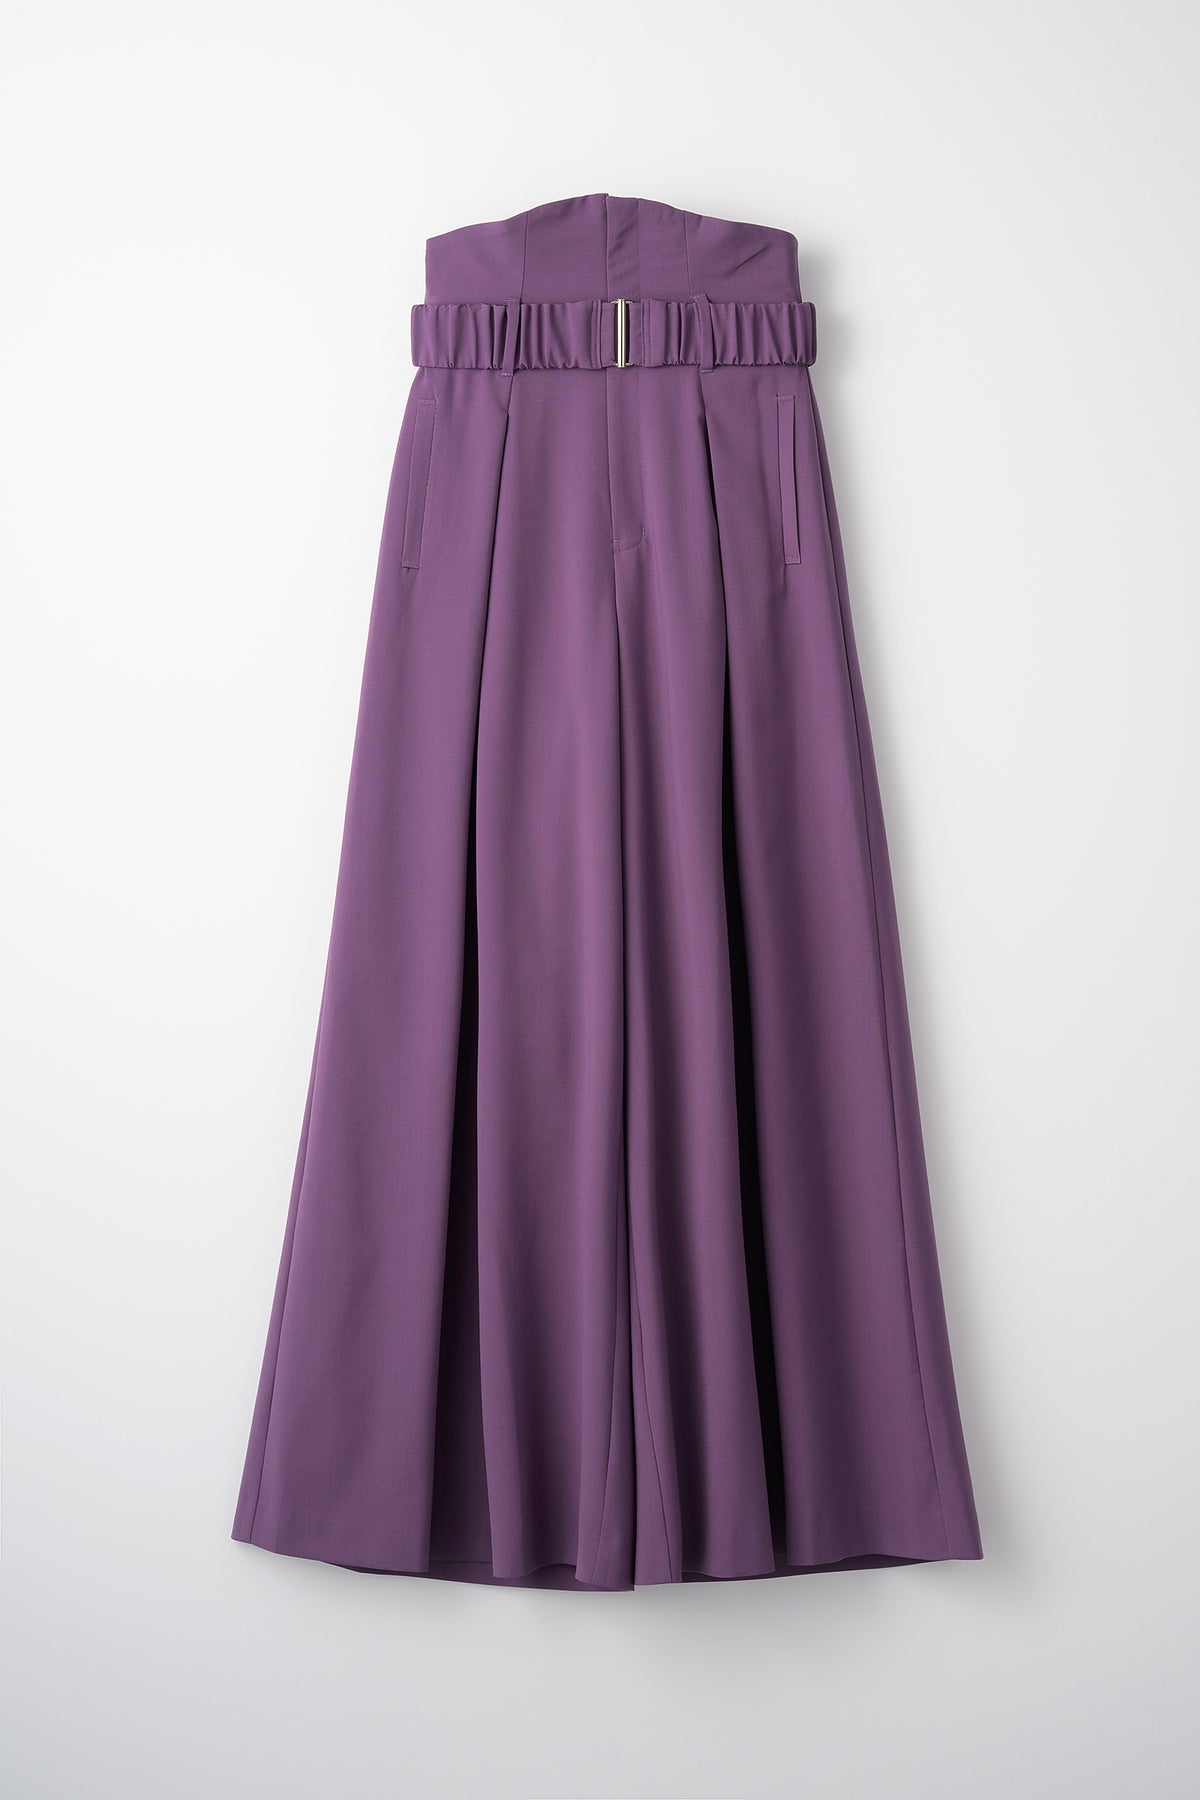 Contrast wide slacks (Purple)